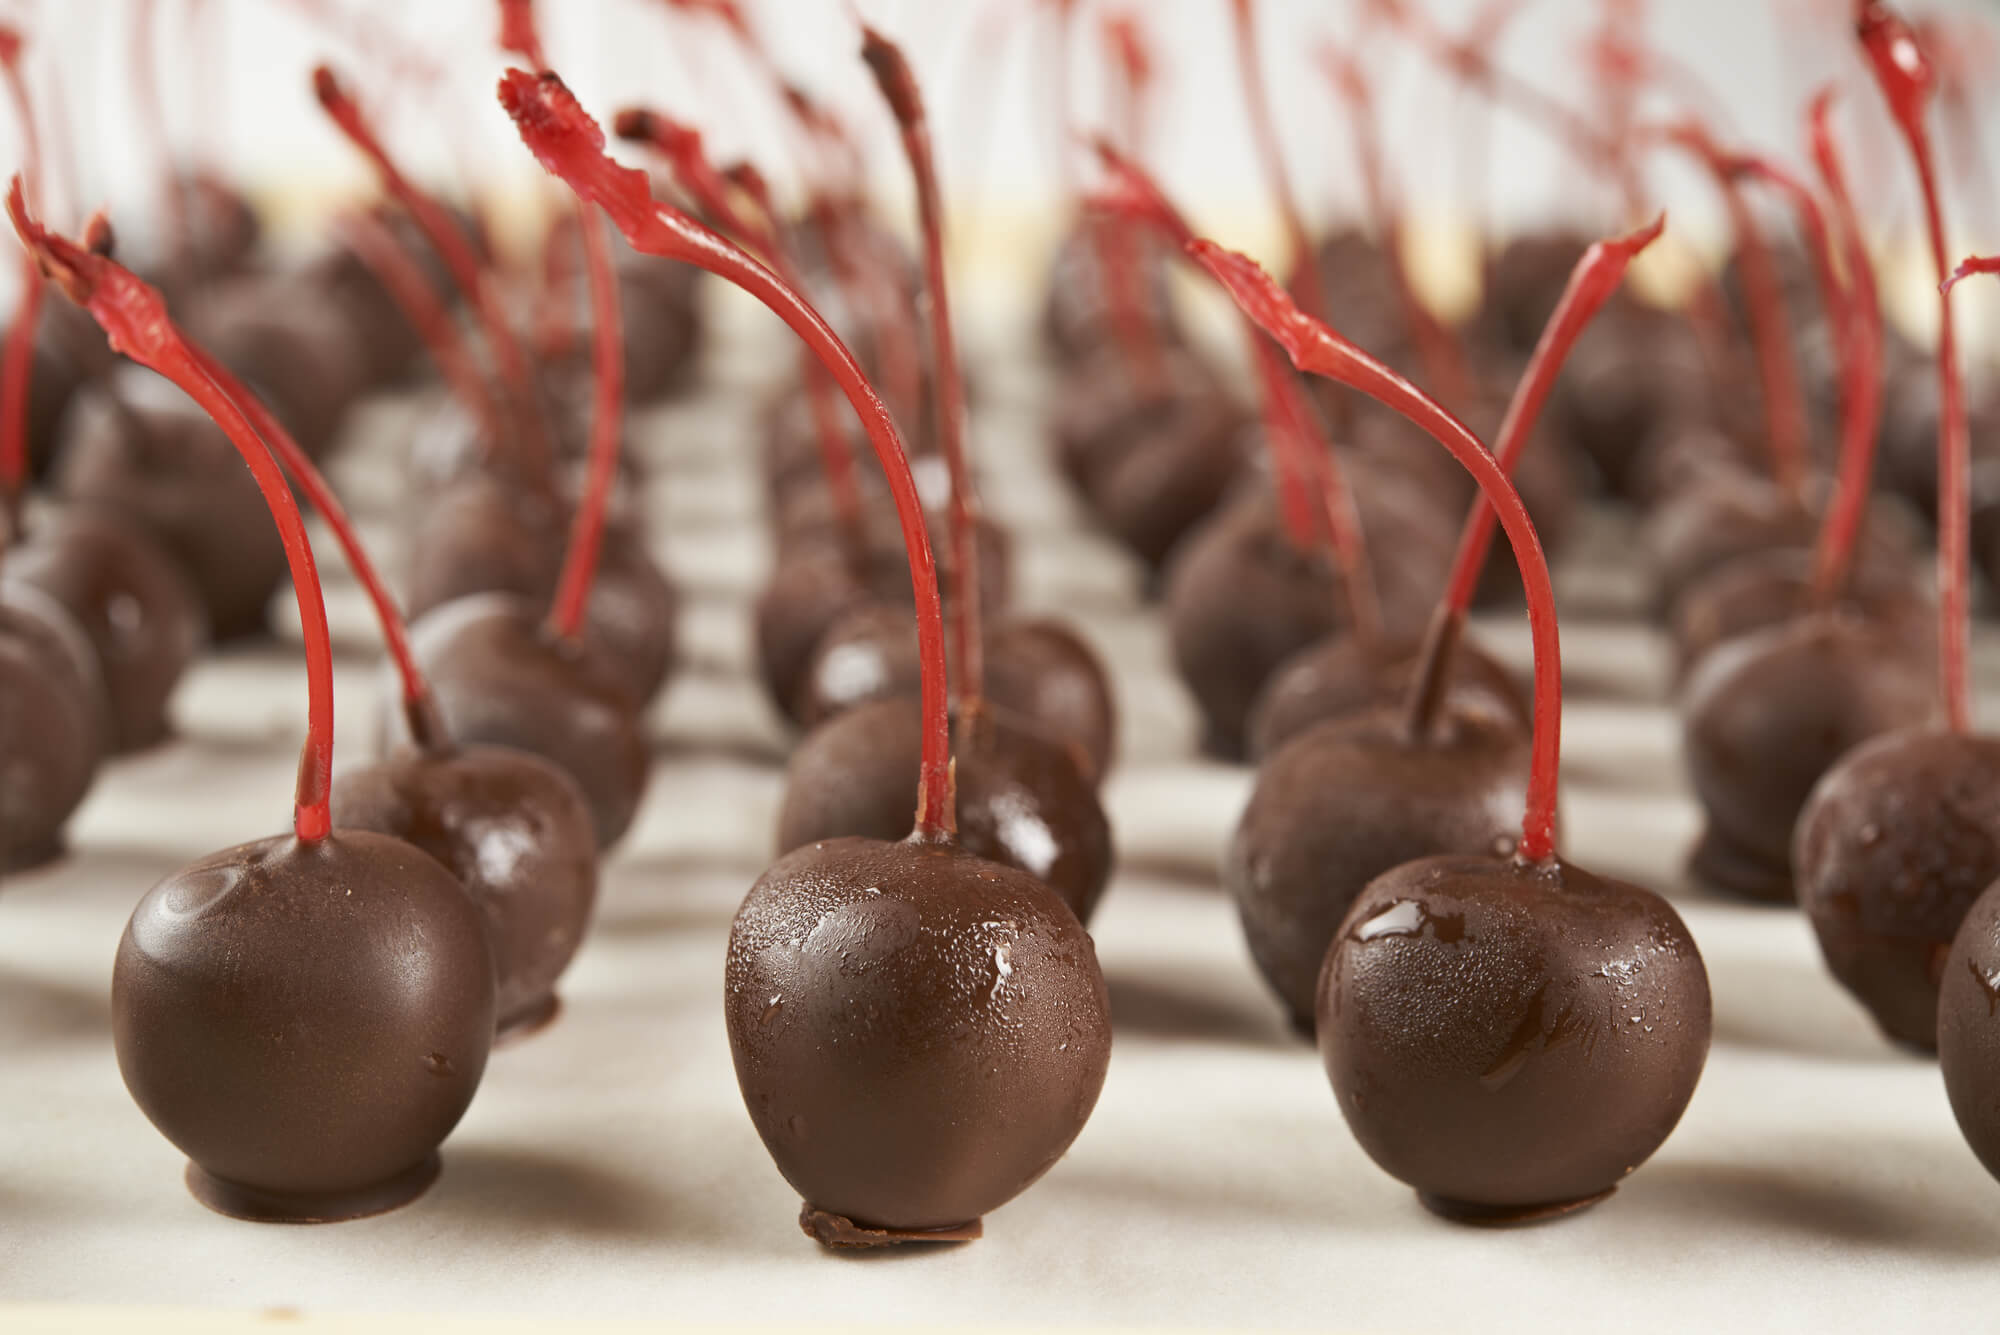 День вишни в шоколаде National Chocolate covered Cherry Day США